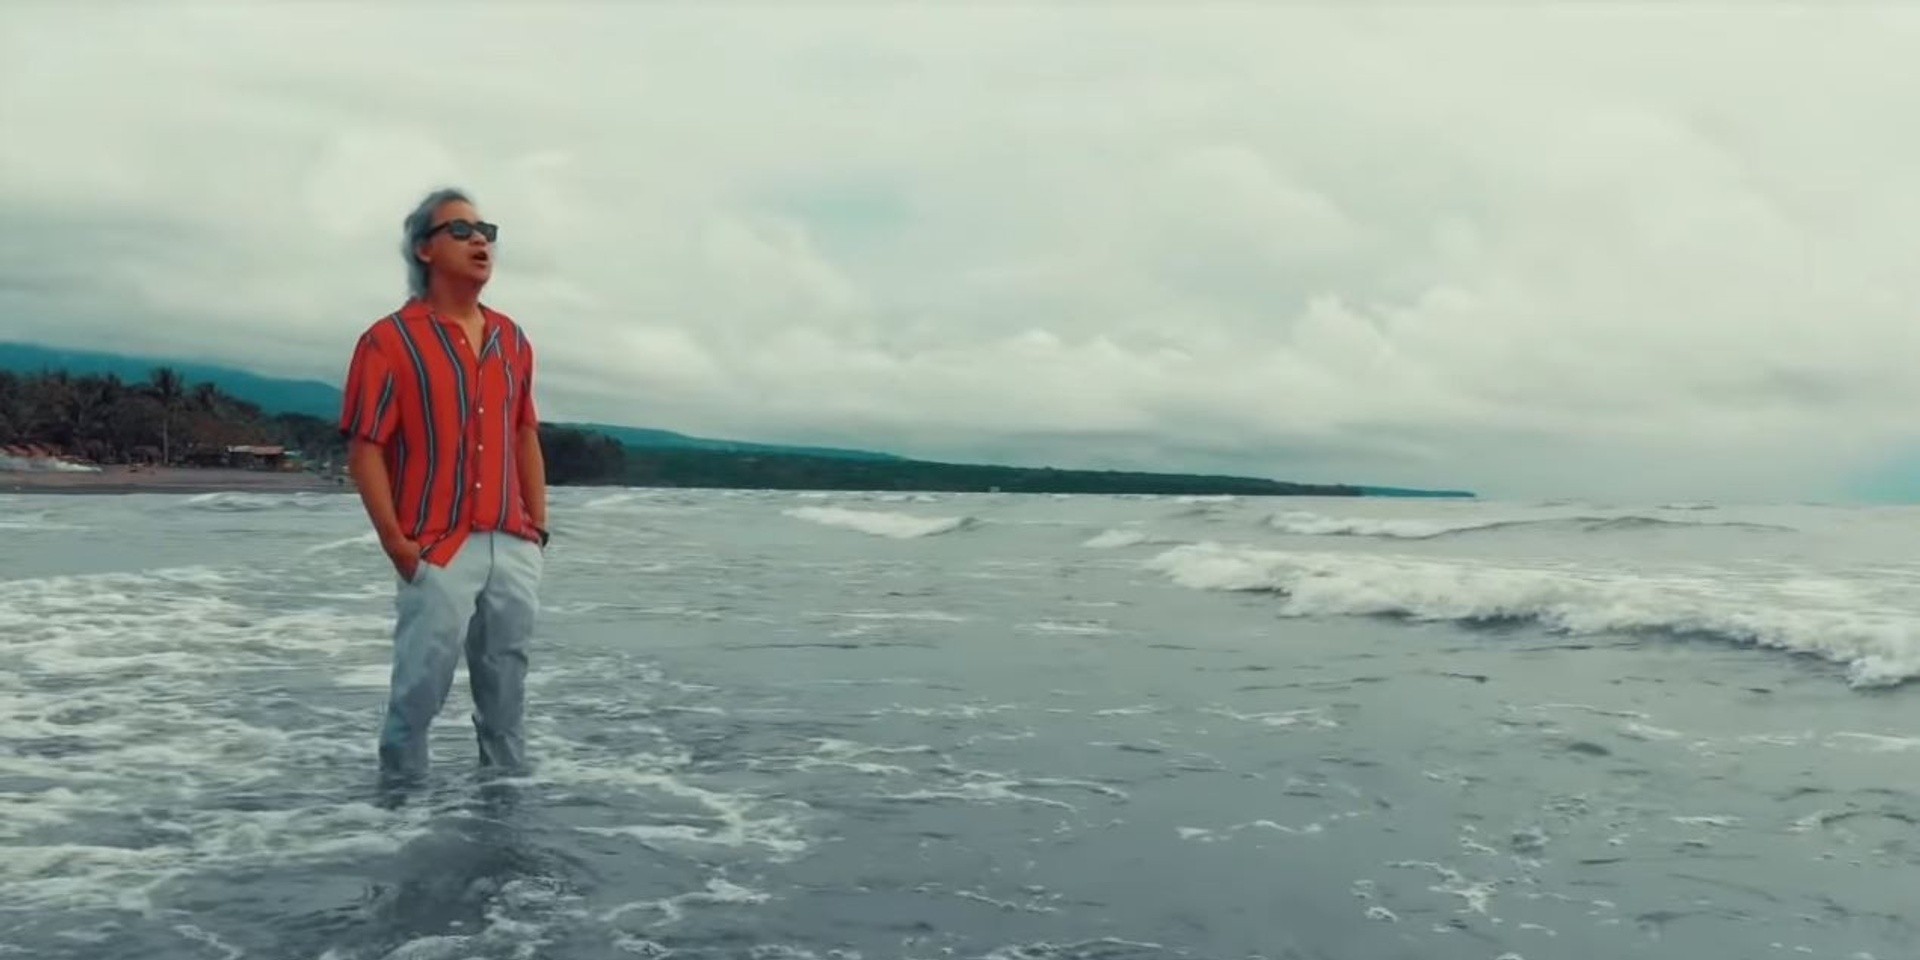 Apartel share scenic 'Sisid' music video – watch